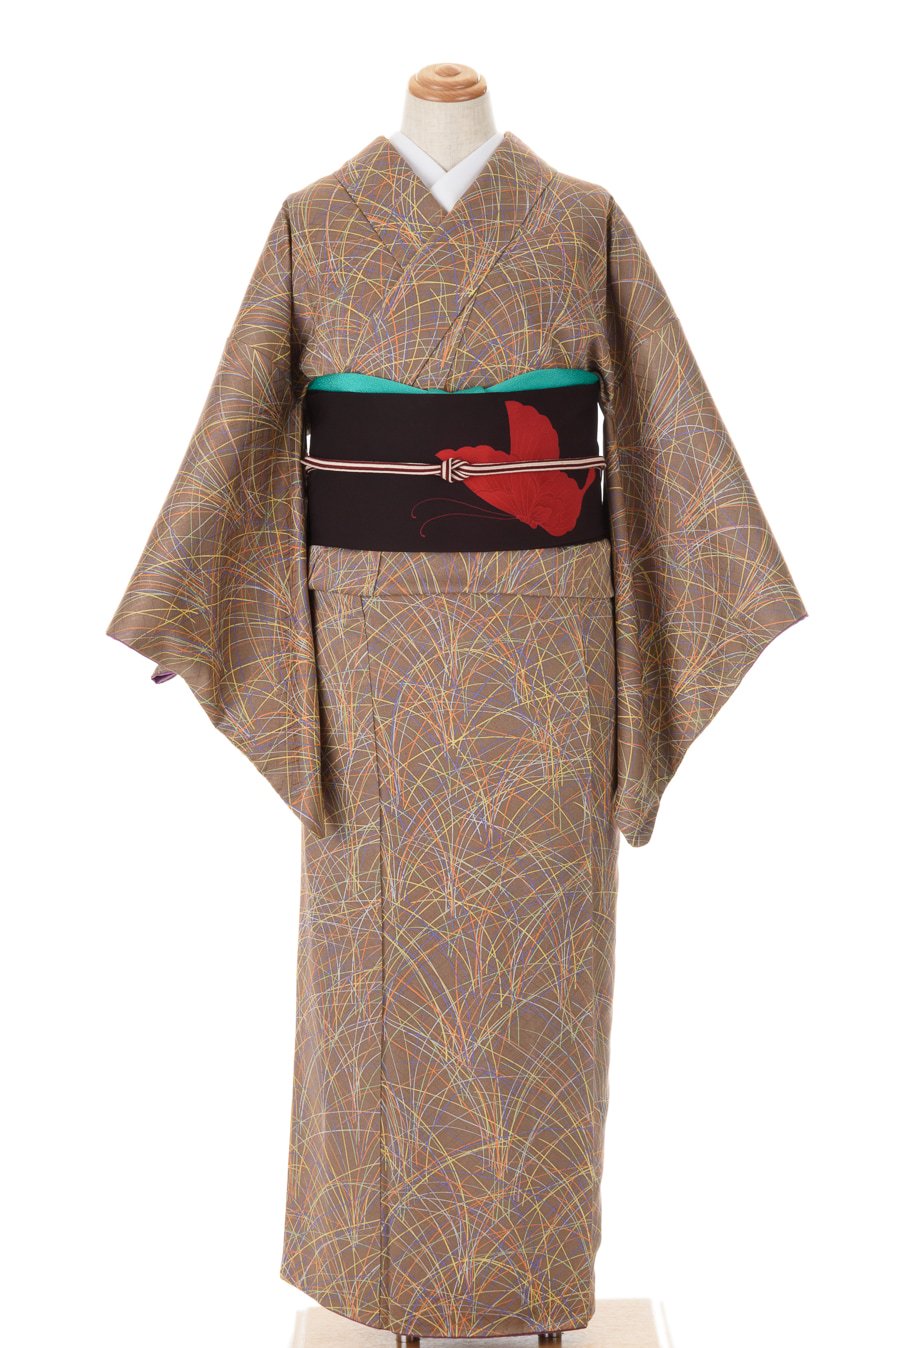 k-1484 上質 色無地 茶系 正絹 広衿 袷 着物